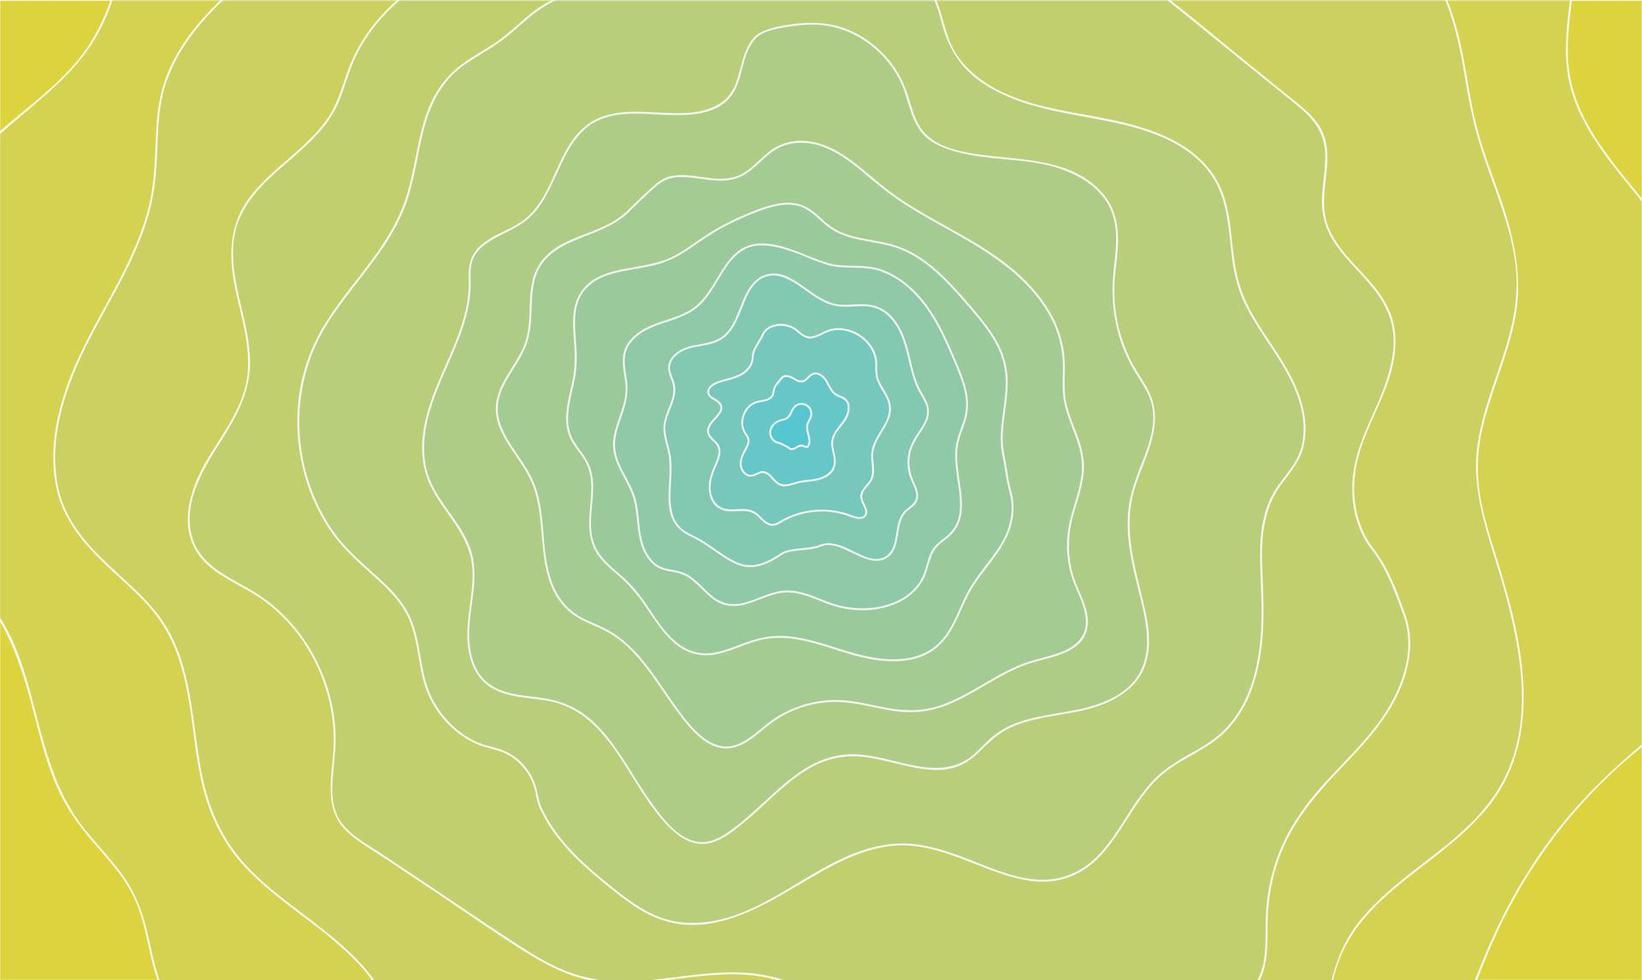 amarillo papel pintado fondo pantalla interior escenario vector telón de fondo geométrico plantilla banner color